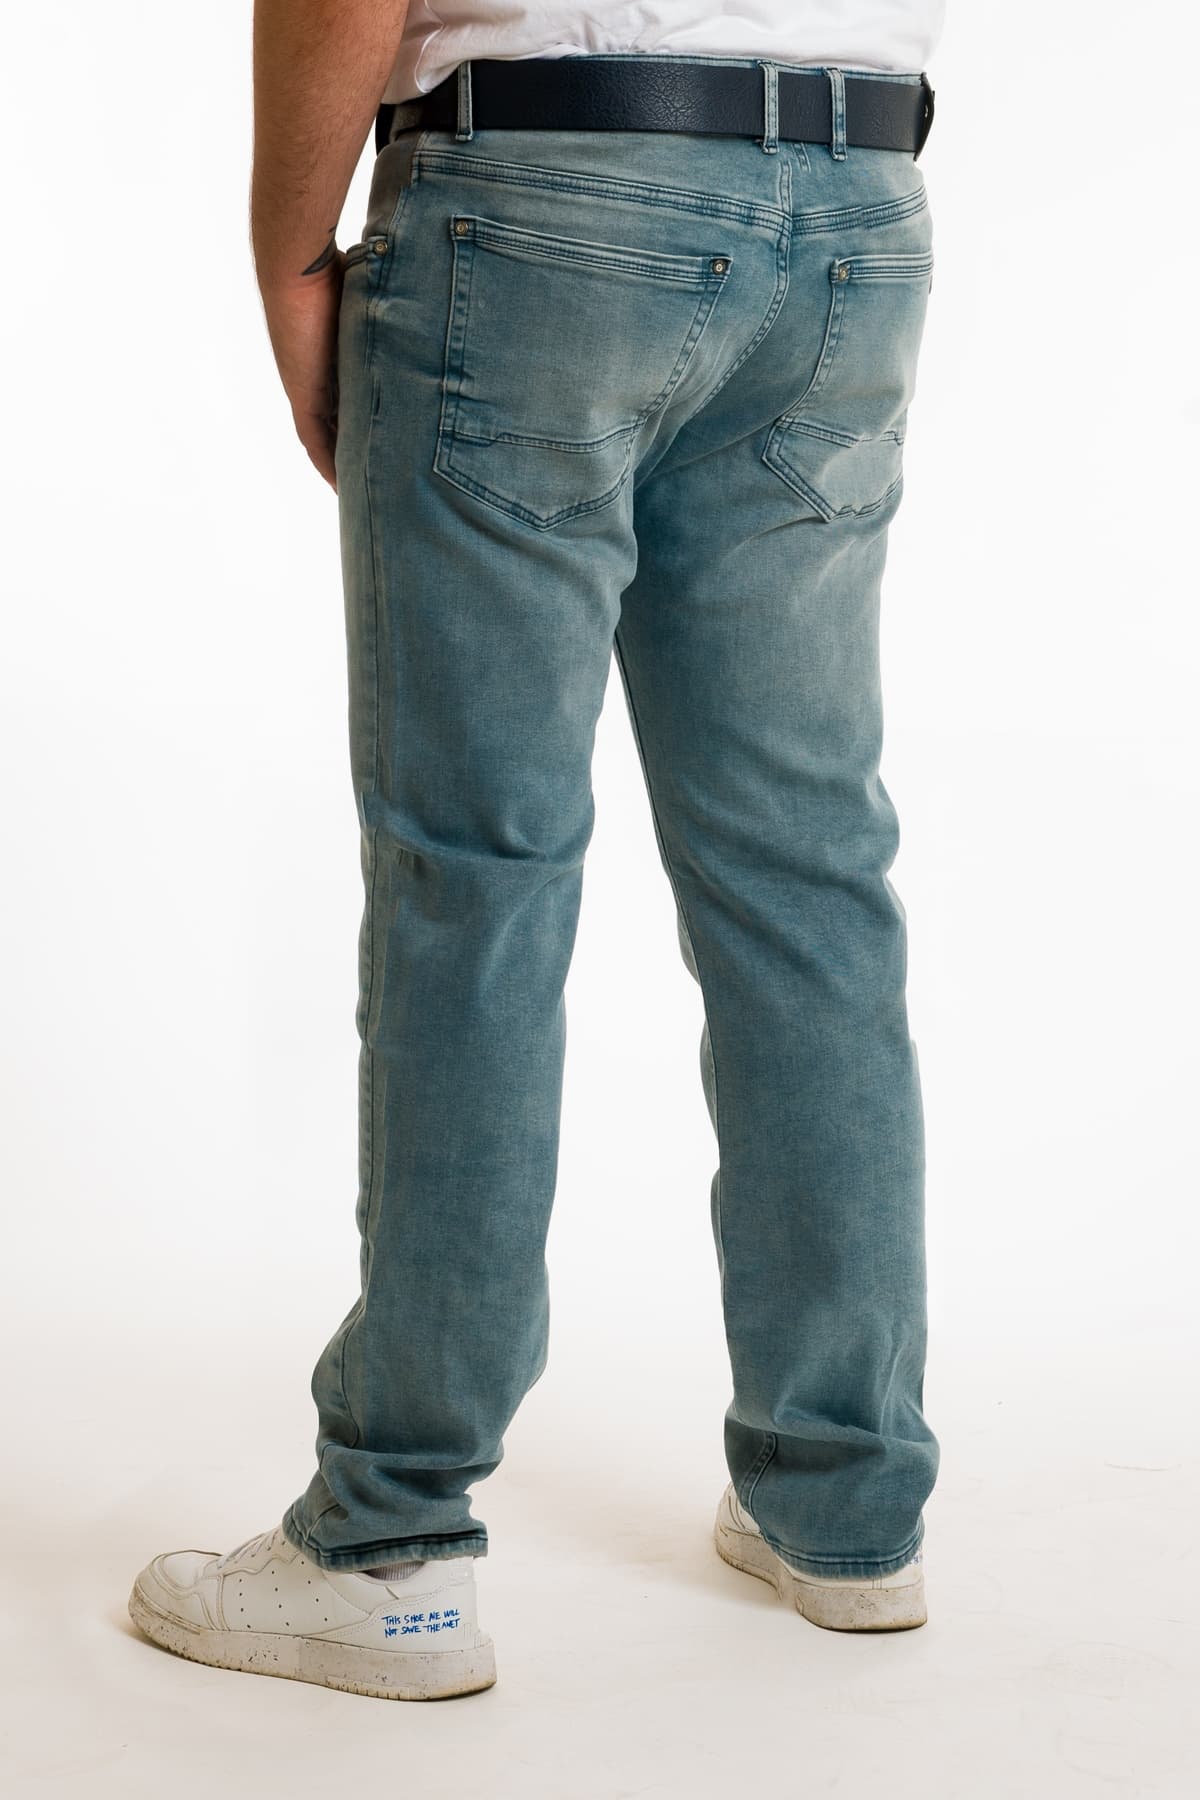 Desperado 962 Düz Model Kemerli Erkek Kot Pantolon